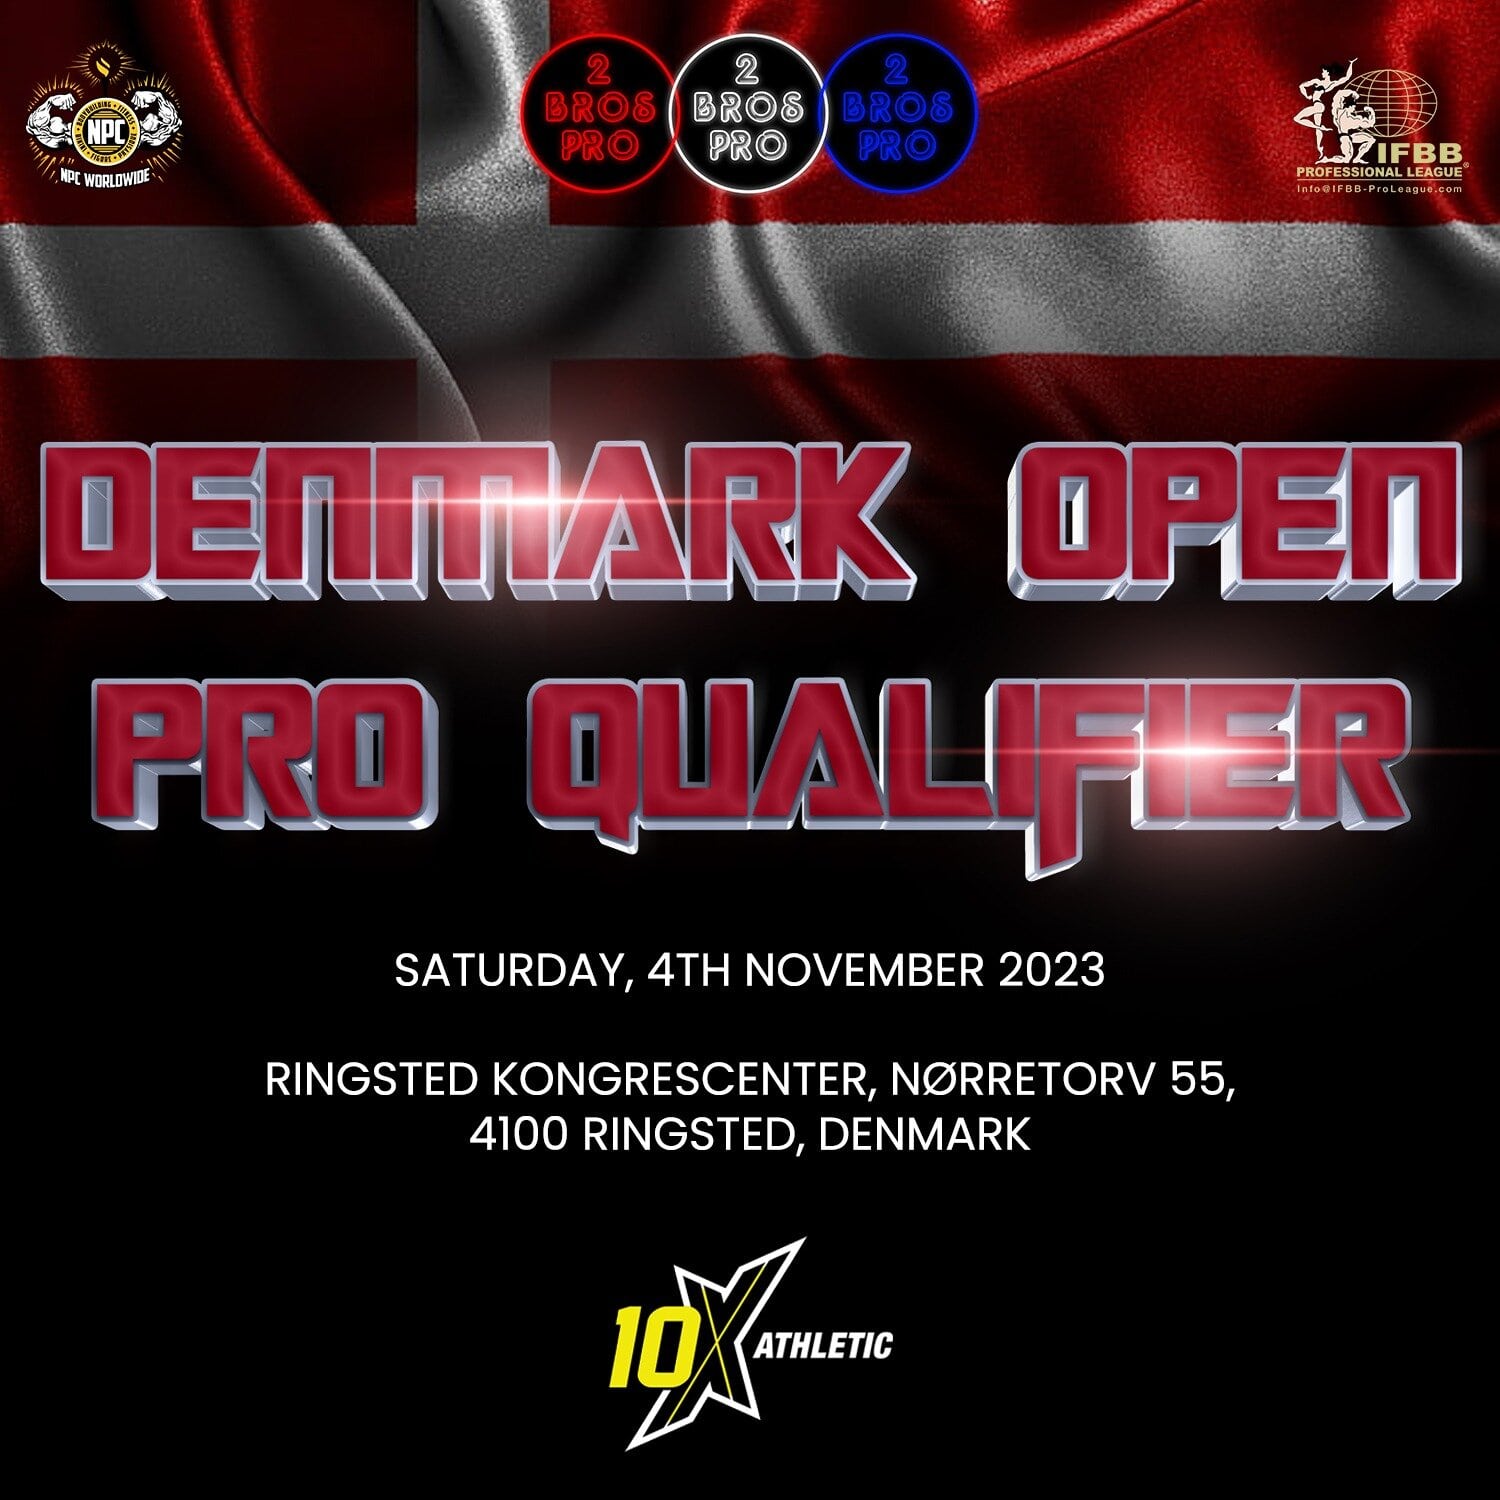 NPC Pro Qualifier Denmark (DK)